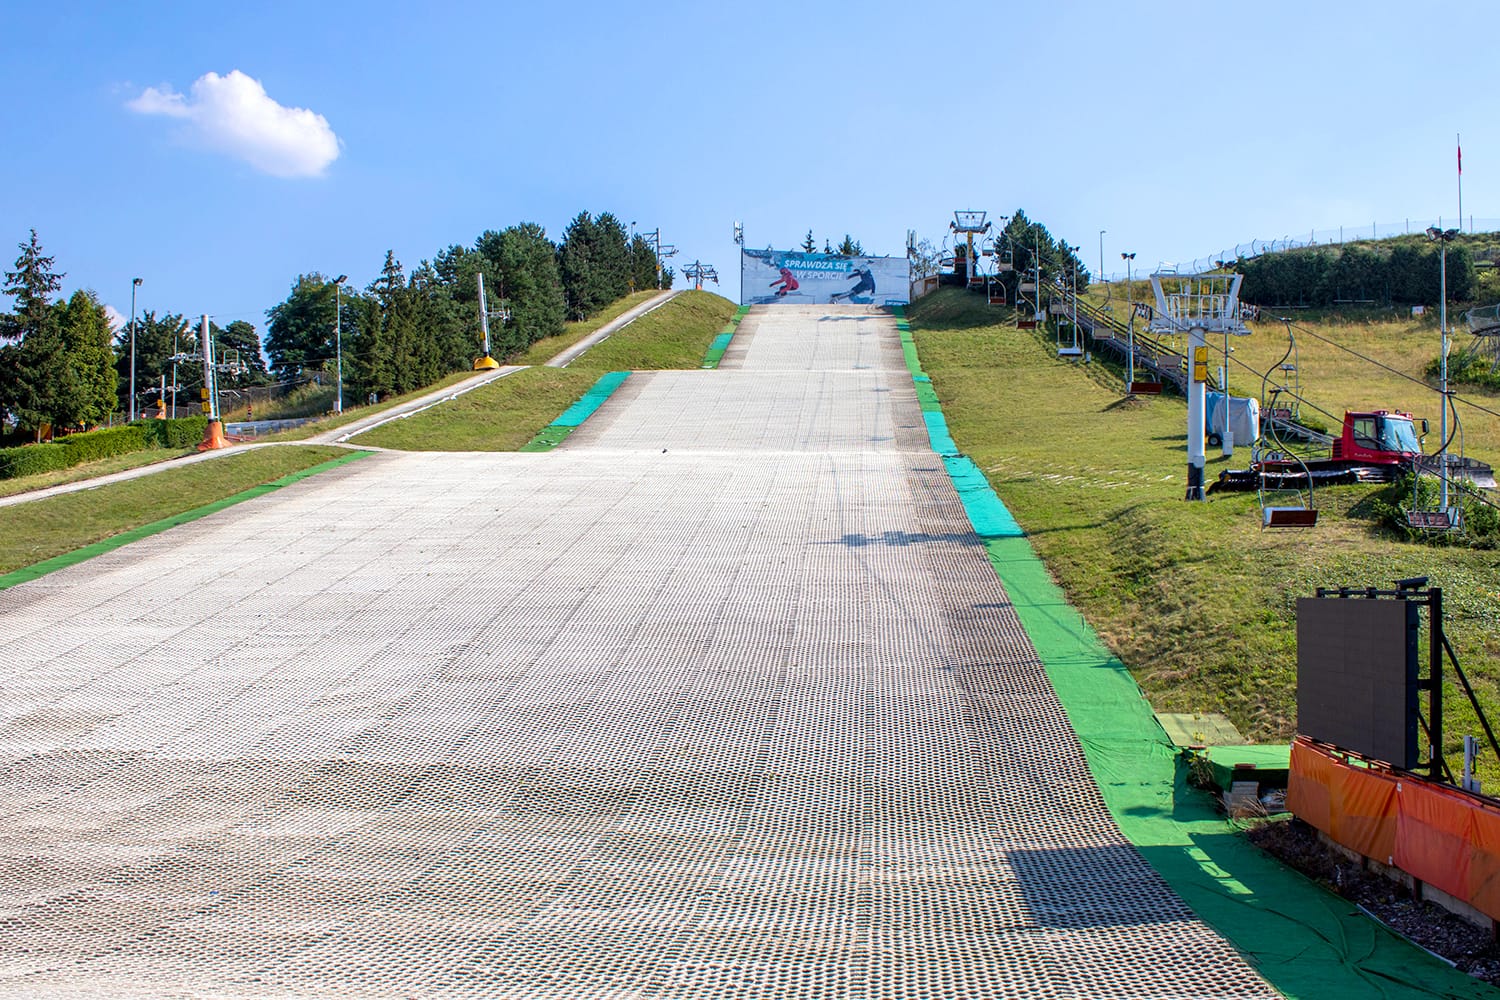 Artificial ski track at the Malta park in Poznan, Poland